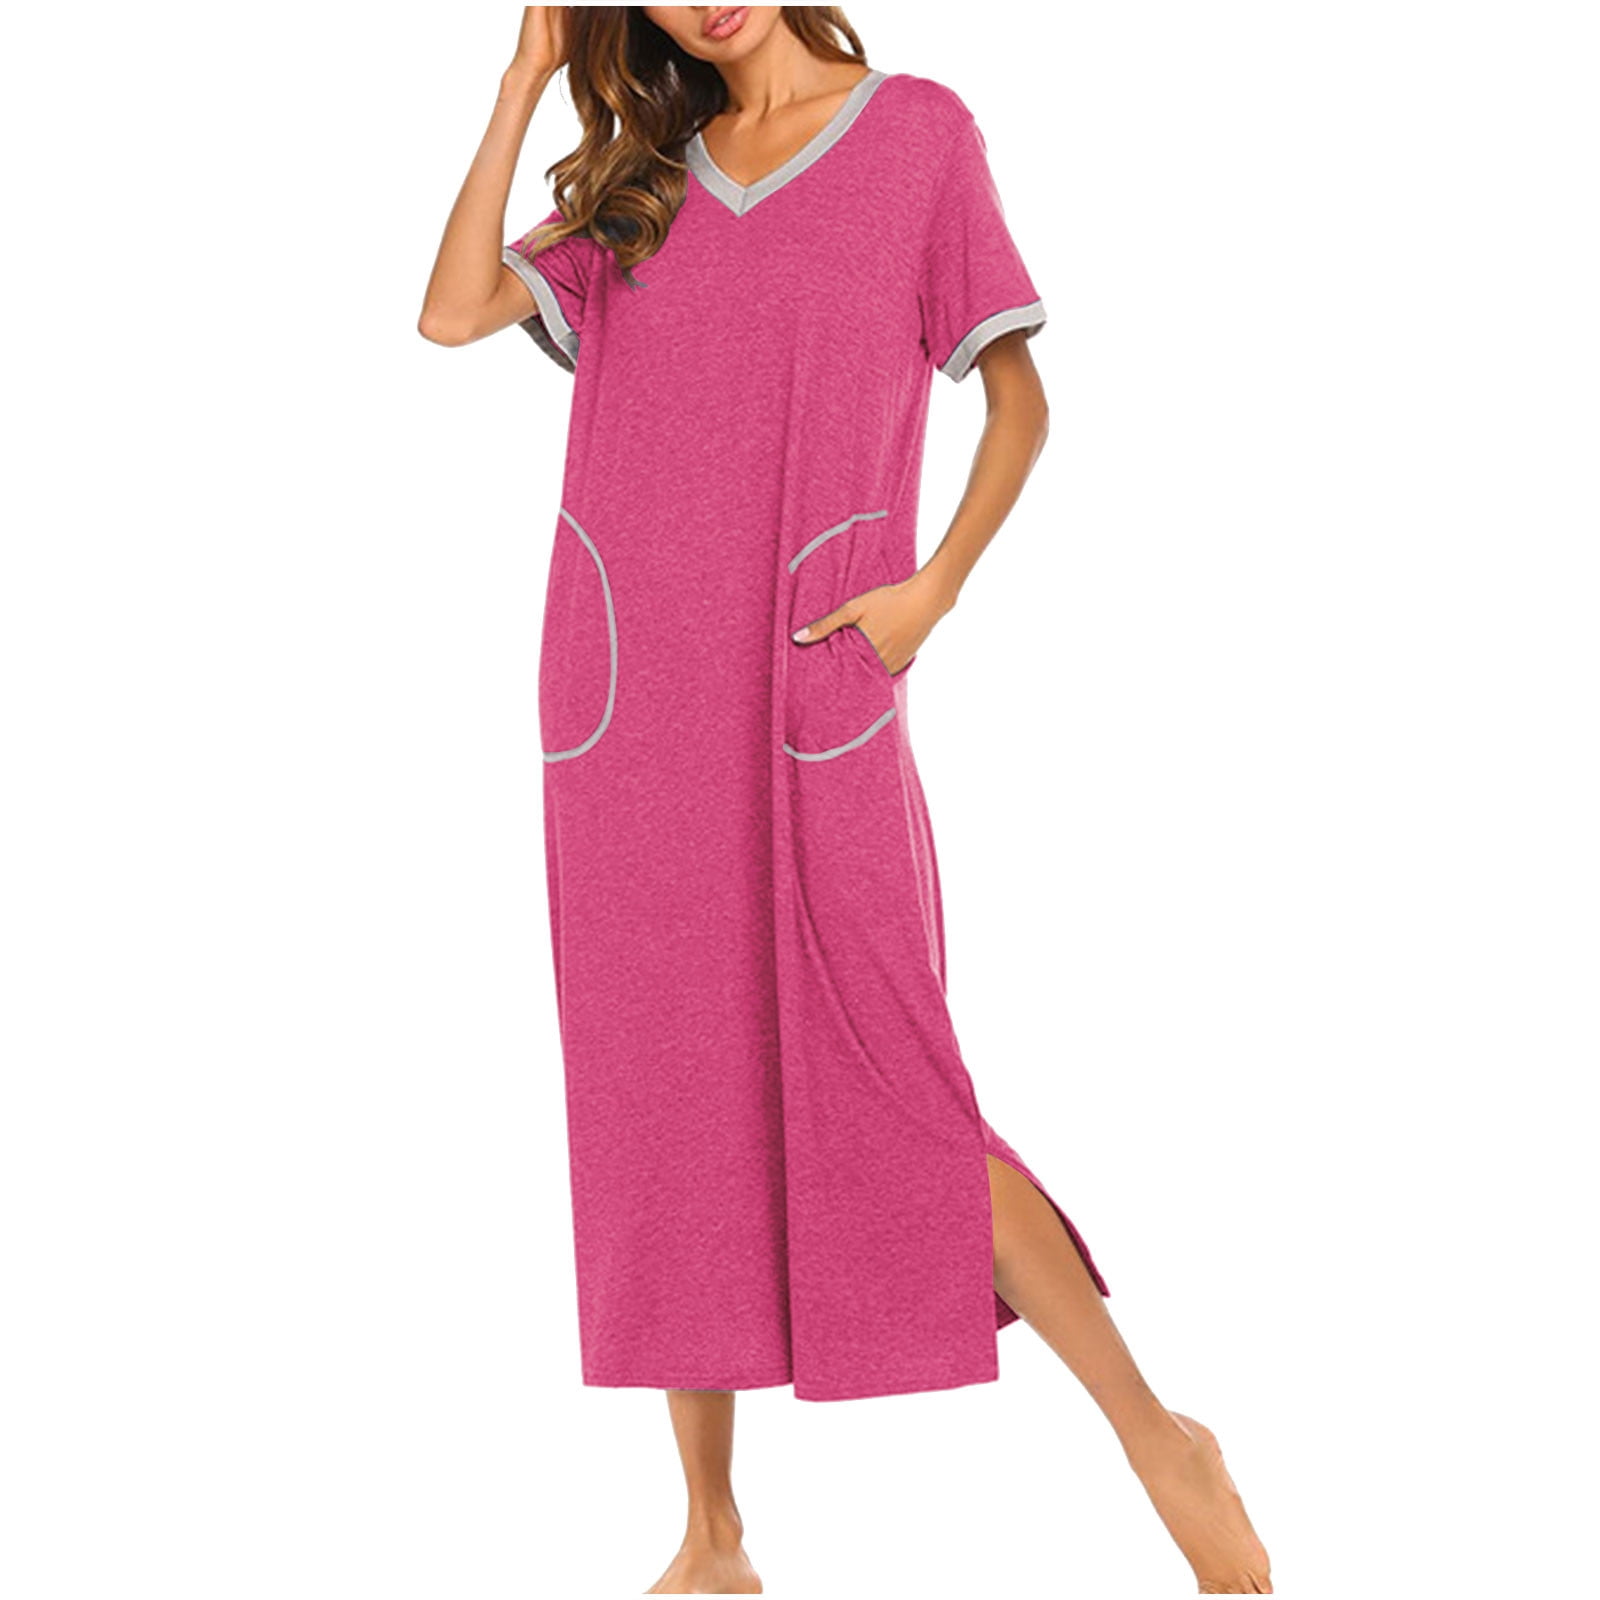 Leesechin Clearance Women’s Nightshirt Short Sleeve Nightgown Ultra ...